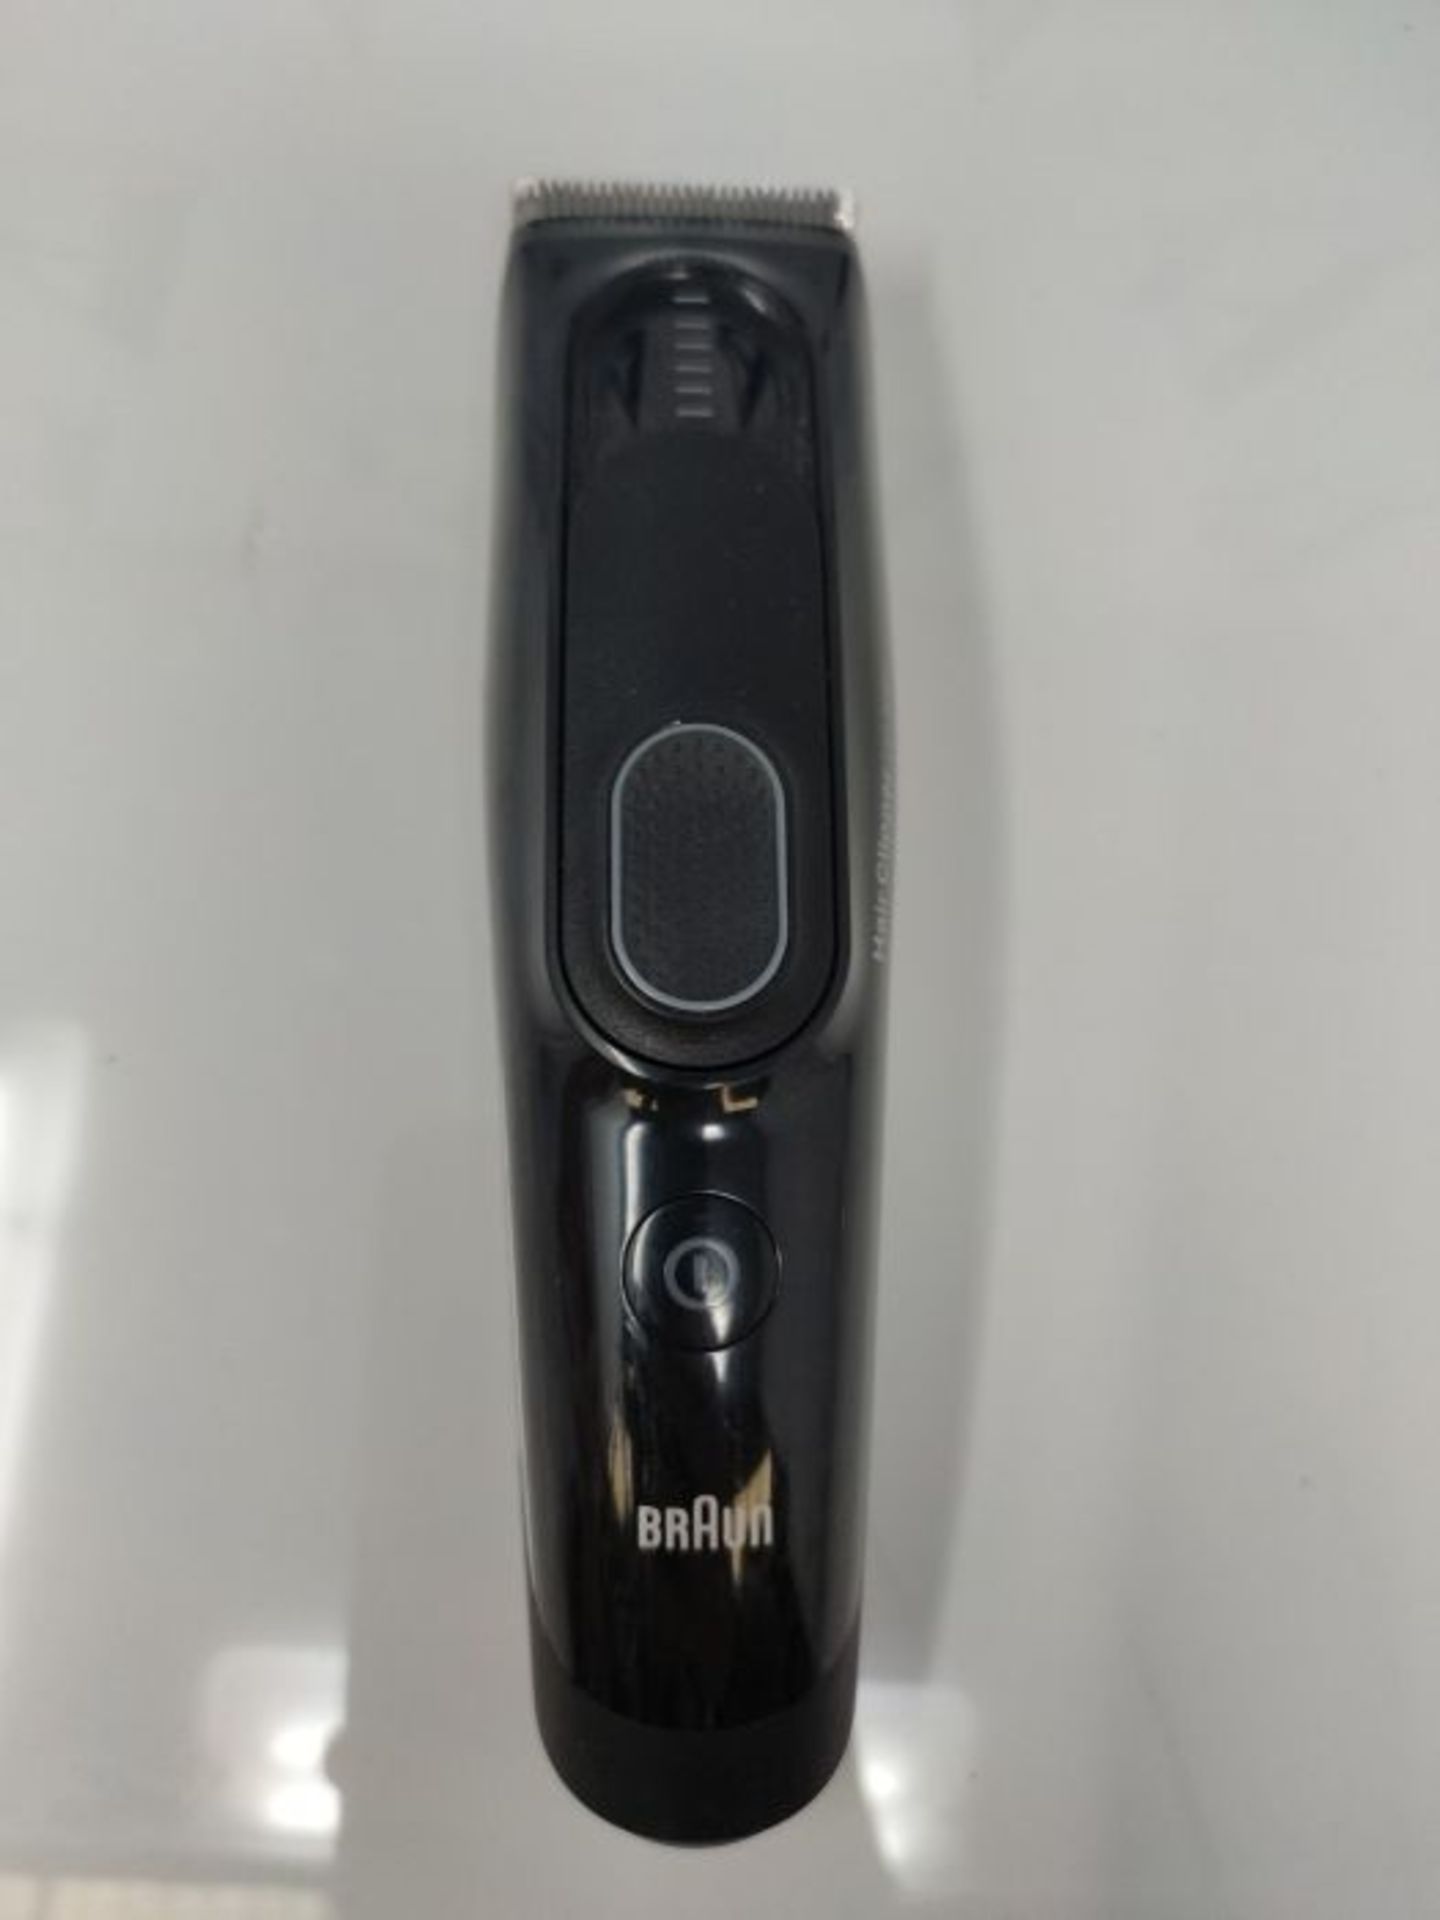 Braun HC5050 Hair Clipper Razor Electric Beard, with 17 Length Settings - Image 2 of 2